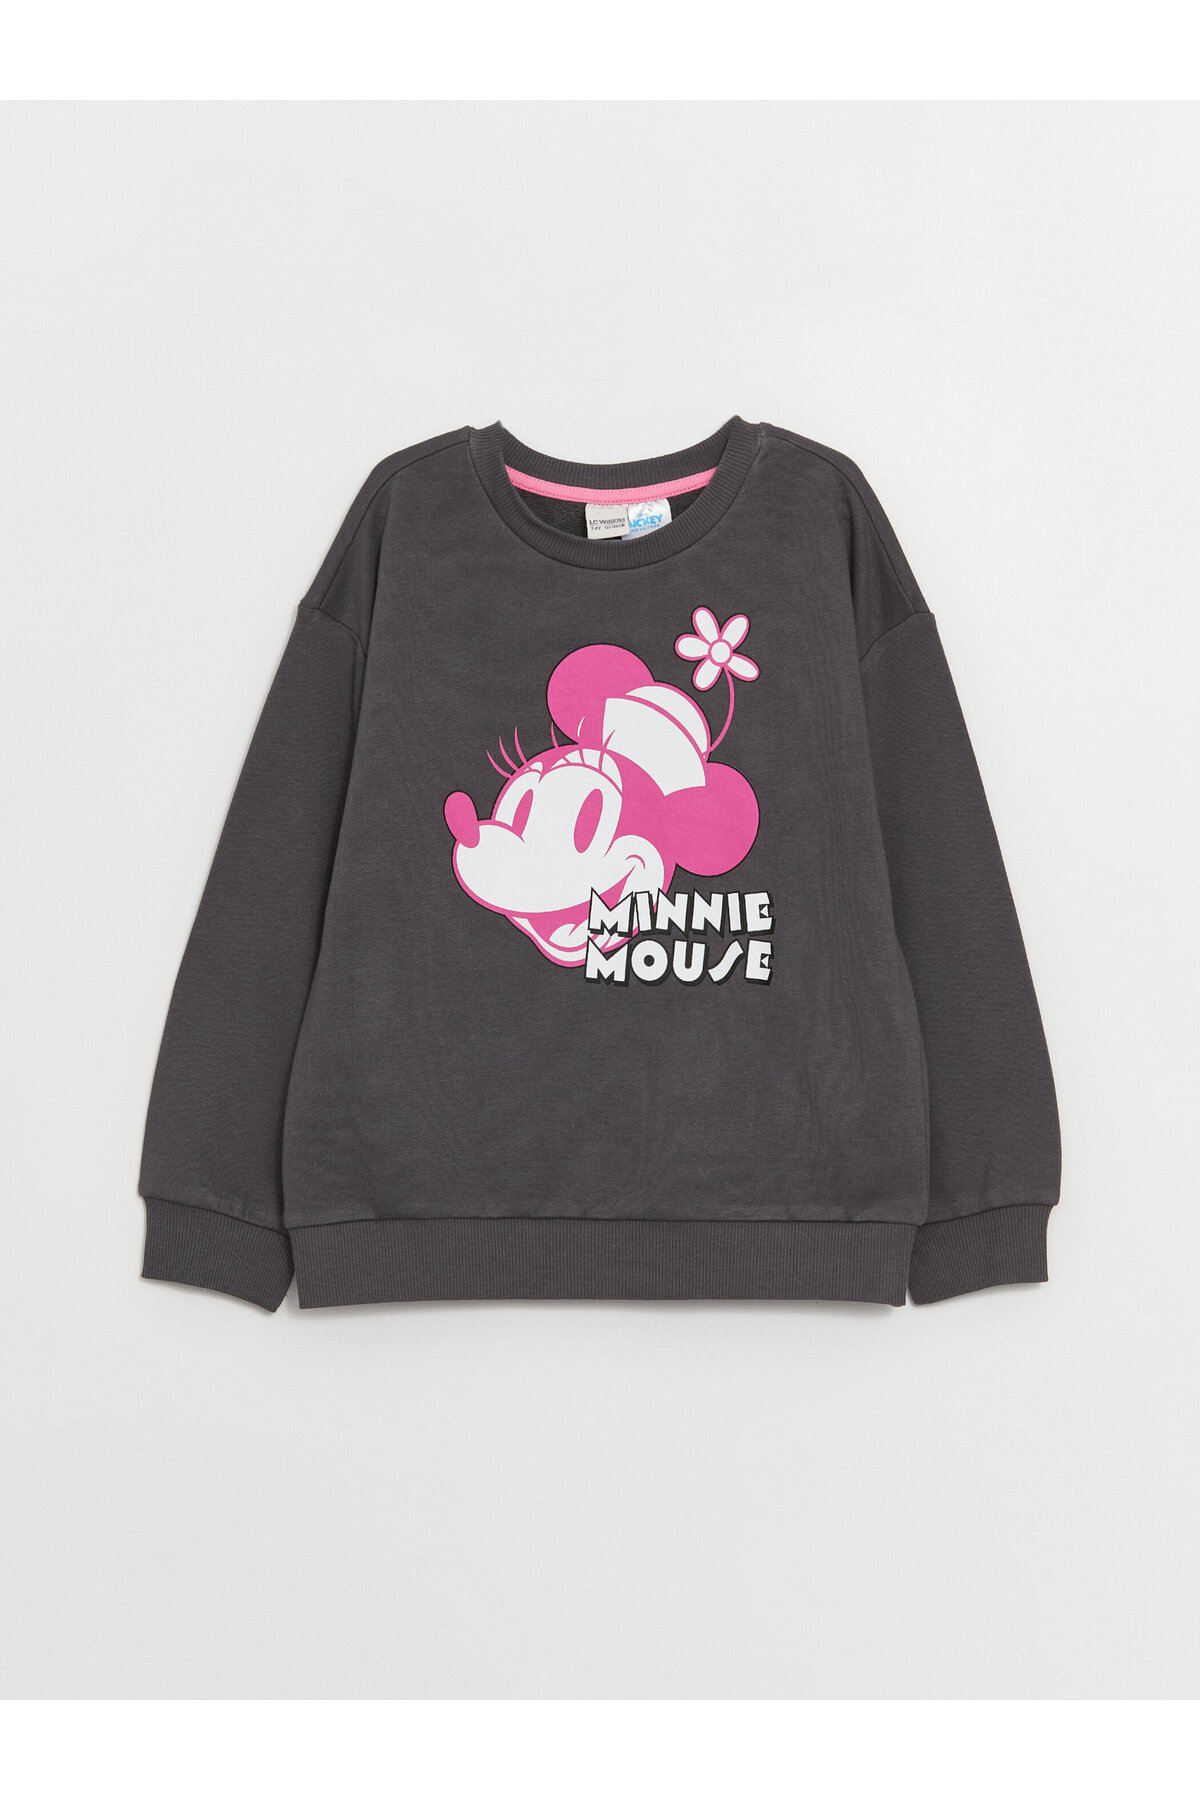 LC Waikiki Girls' Crew Neck Minnie Mouse Printed Long Sleeve Sweatshirt